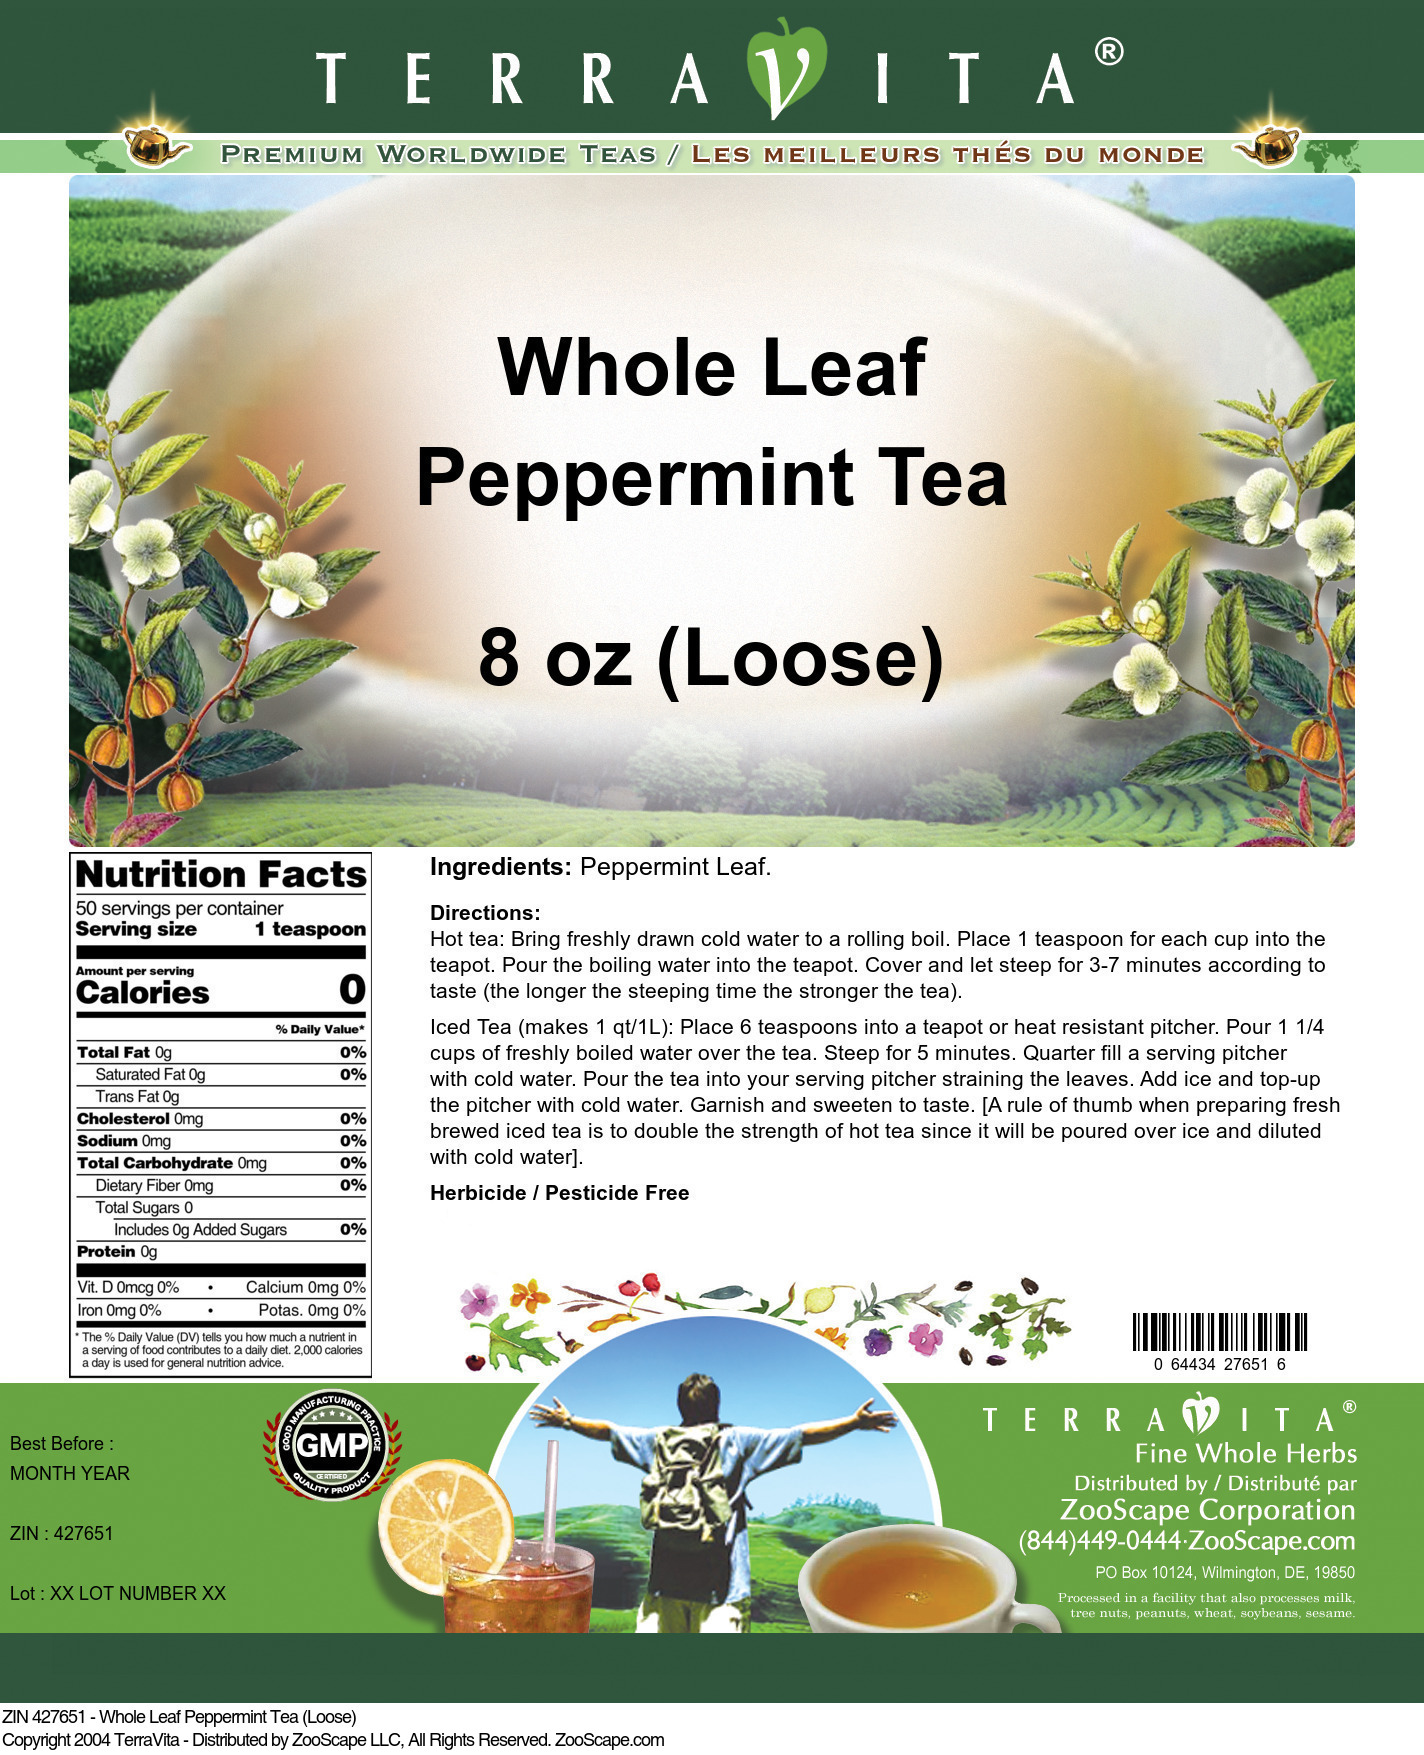 Whole Leaf Peppermint Tea (Loose) - Label